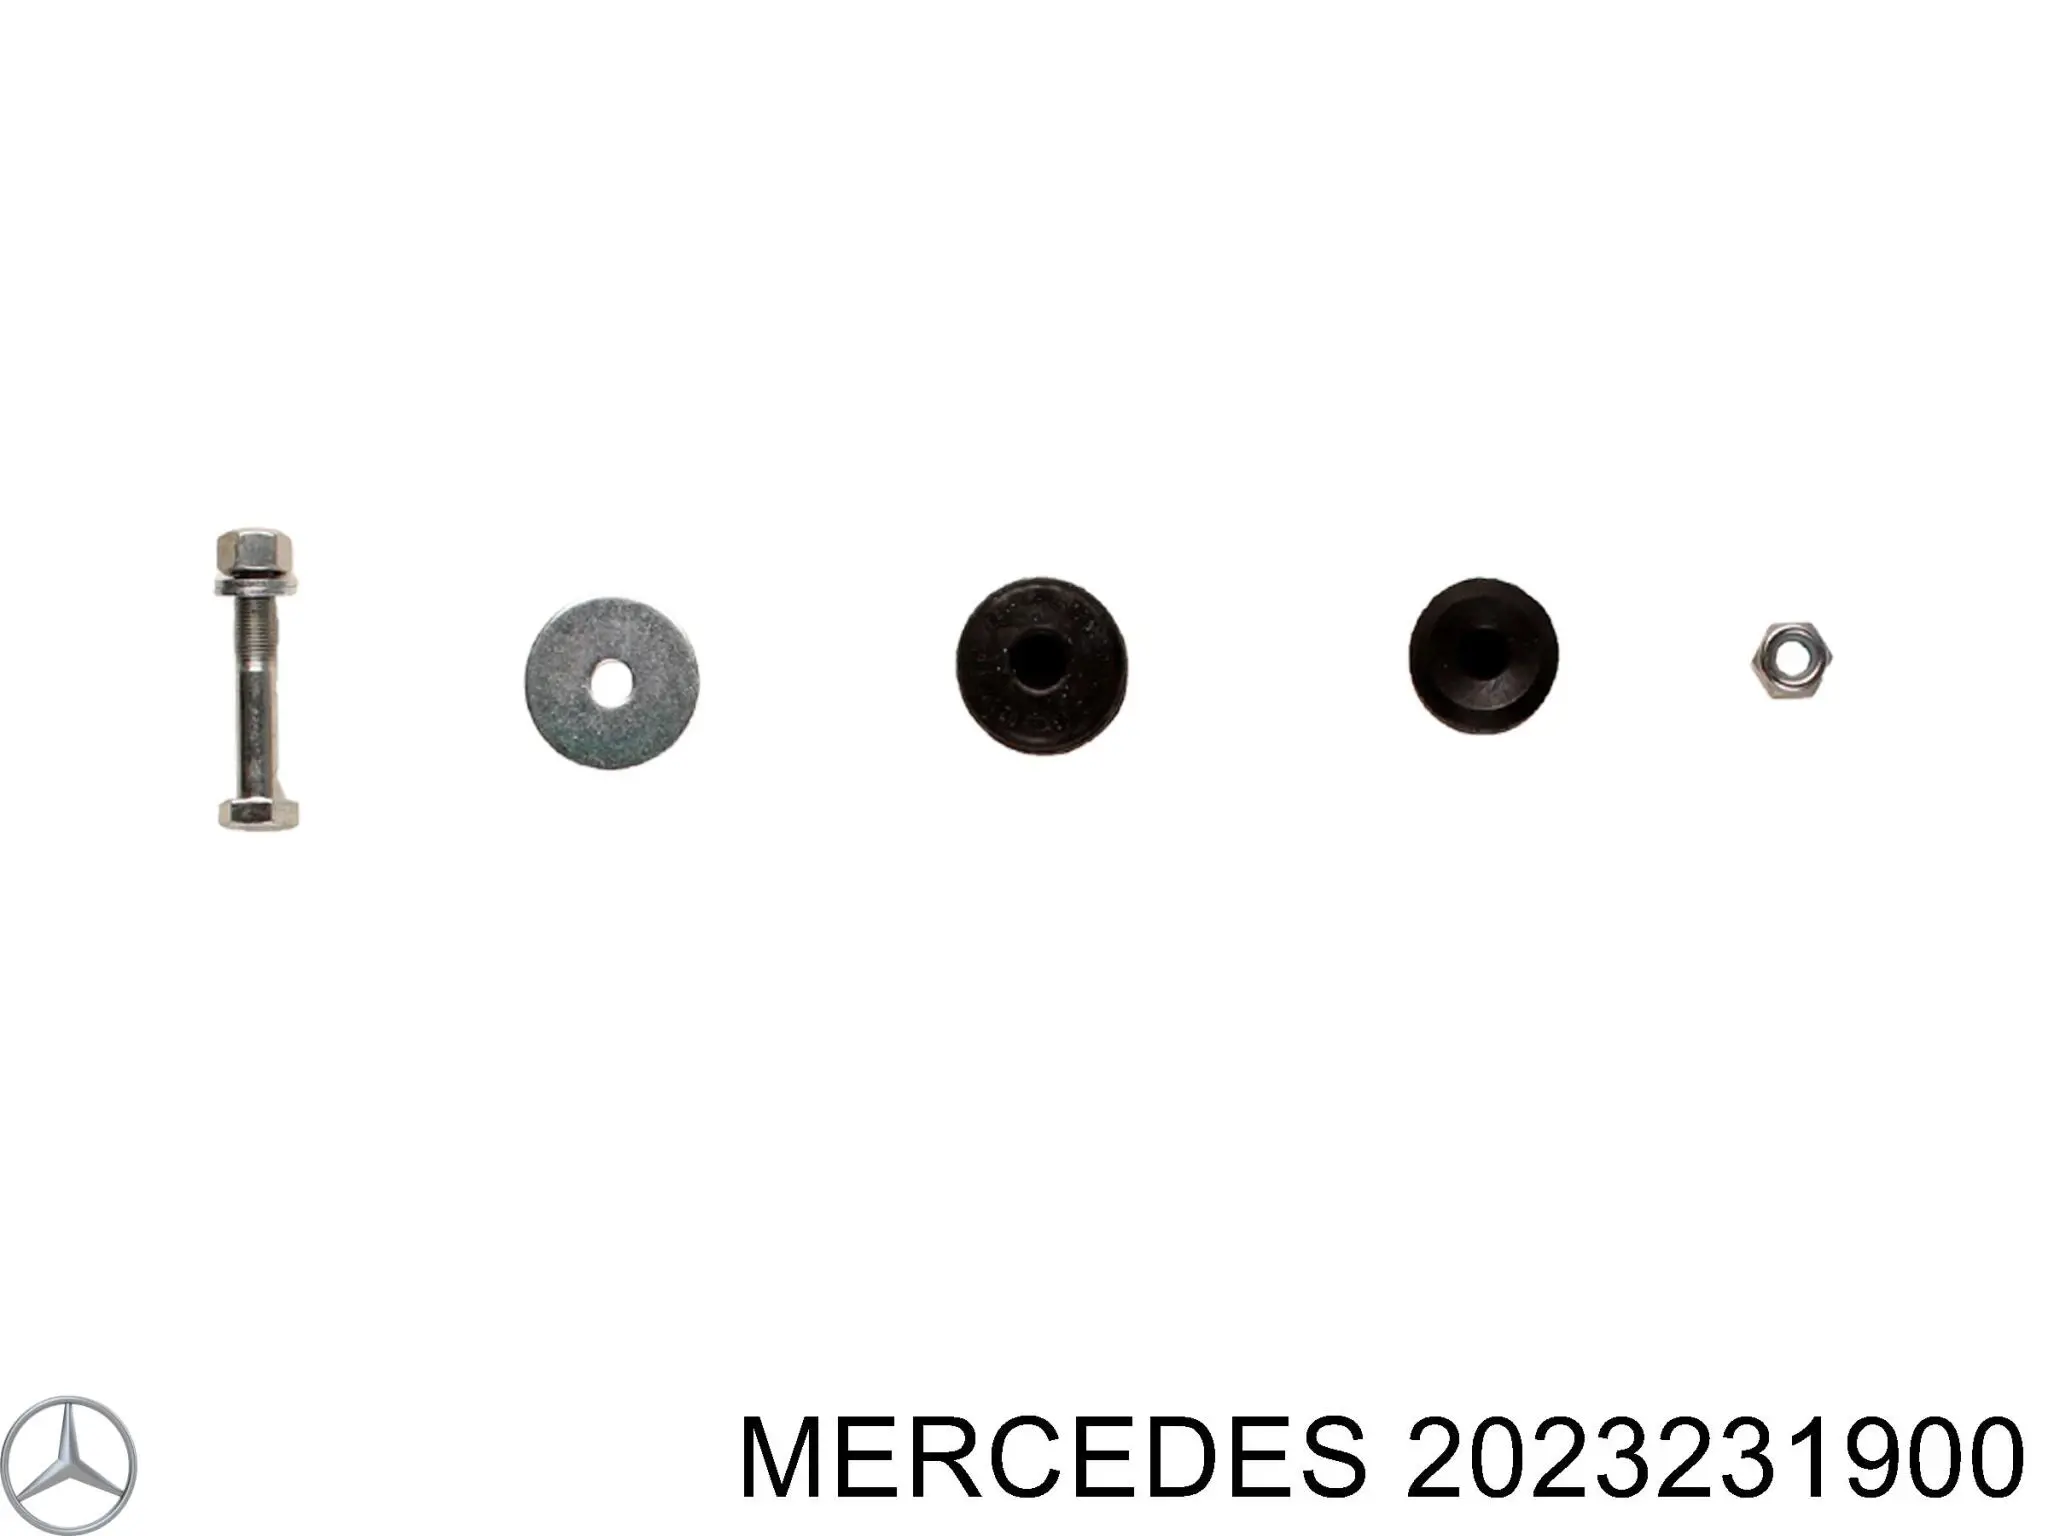 2023231900 Mercedes 